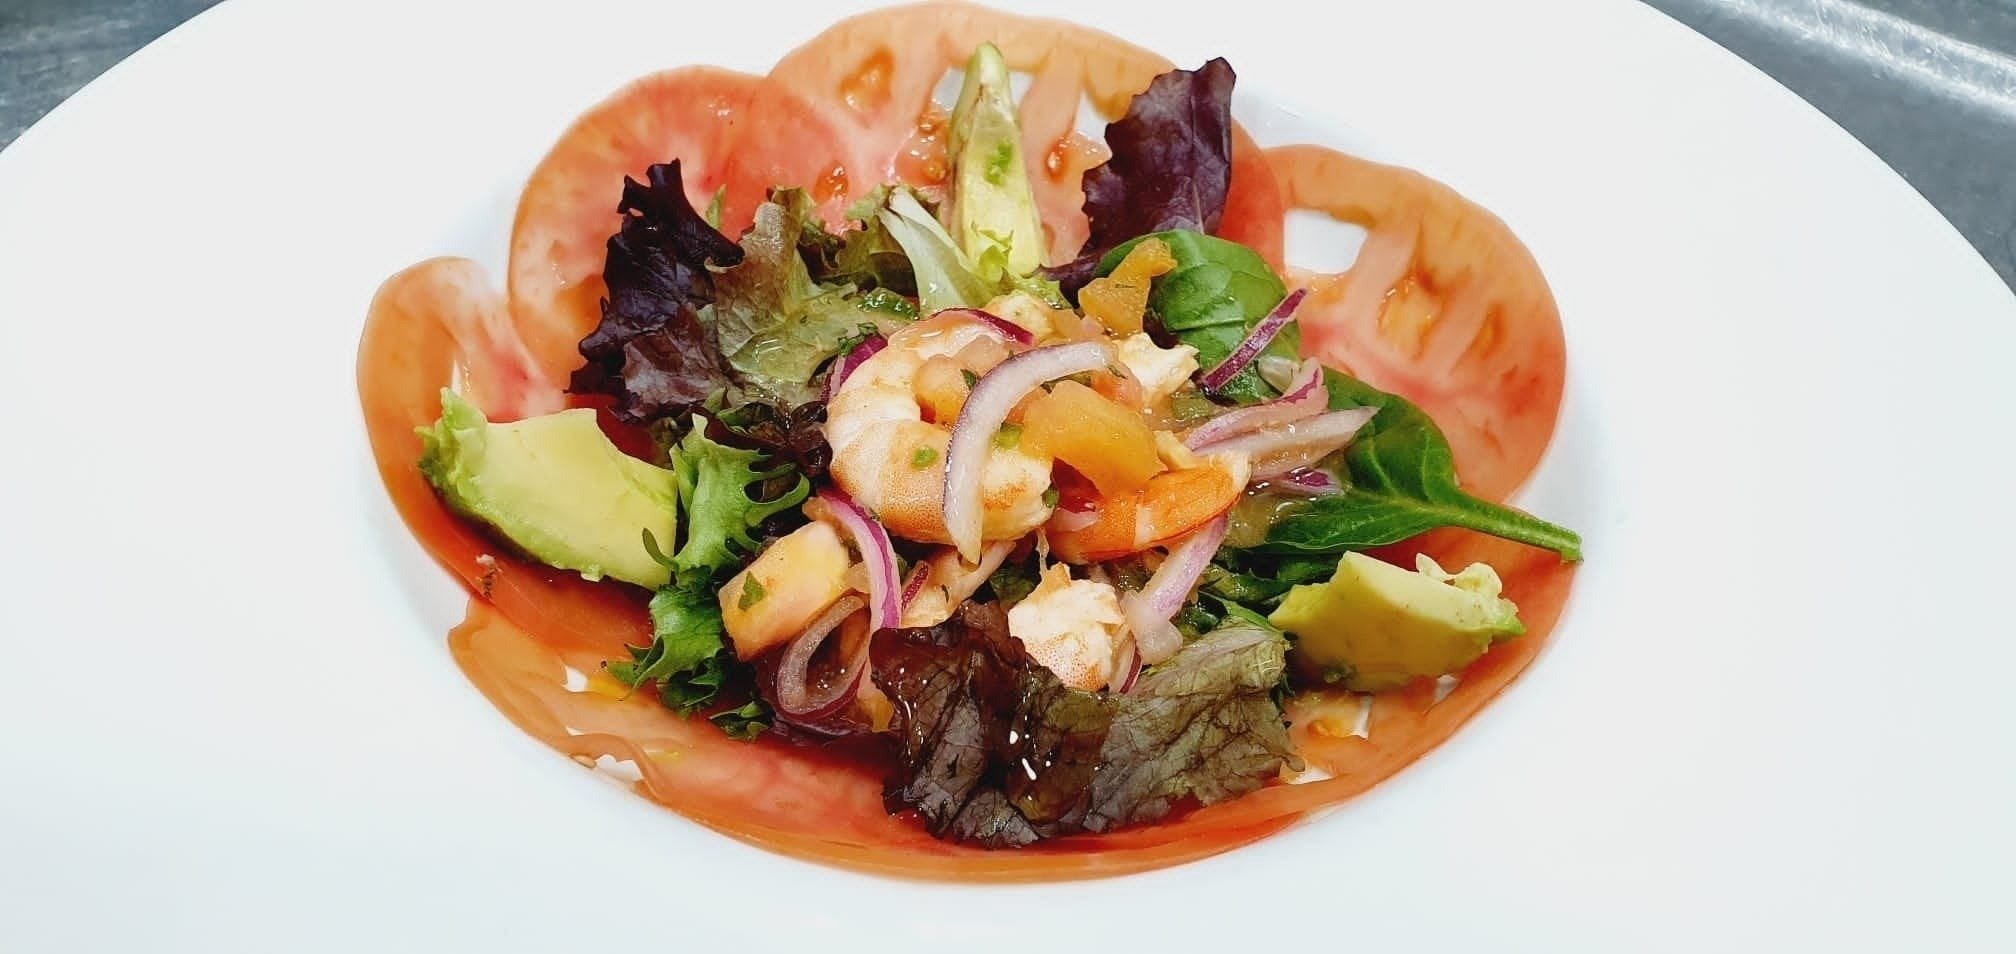 Salad from the Ona Ogisaka Garden Hotel restaurant in Denia